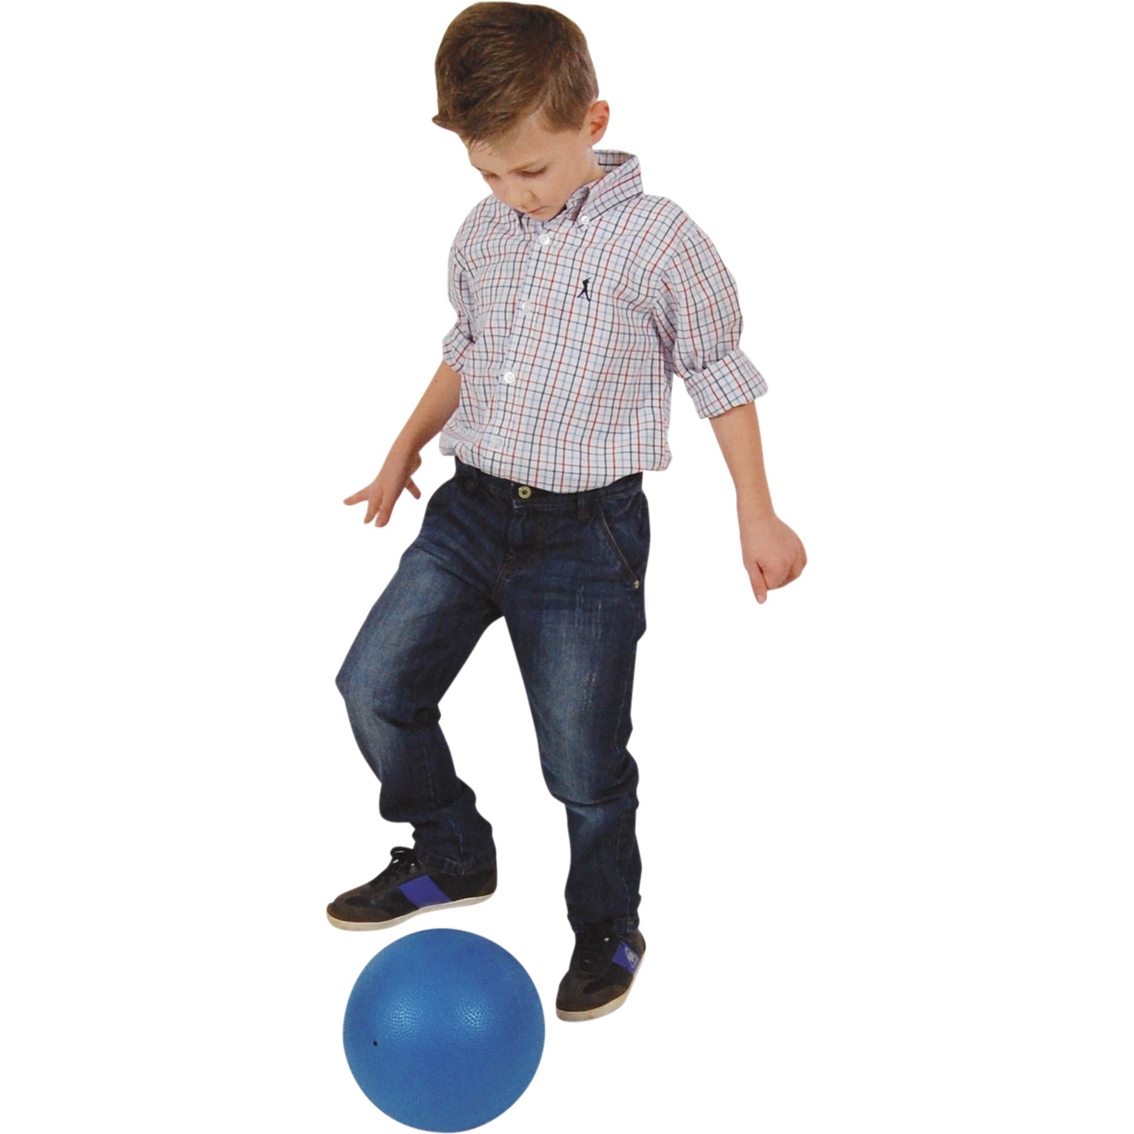 Kettler Gymnic Softplay Foot Ball - Image 2 of 2